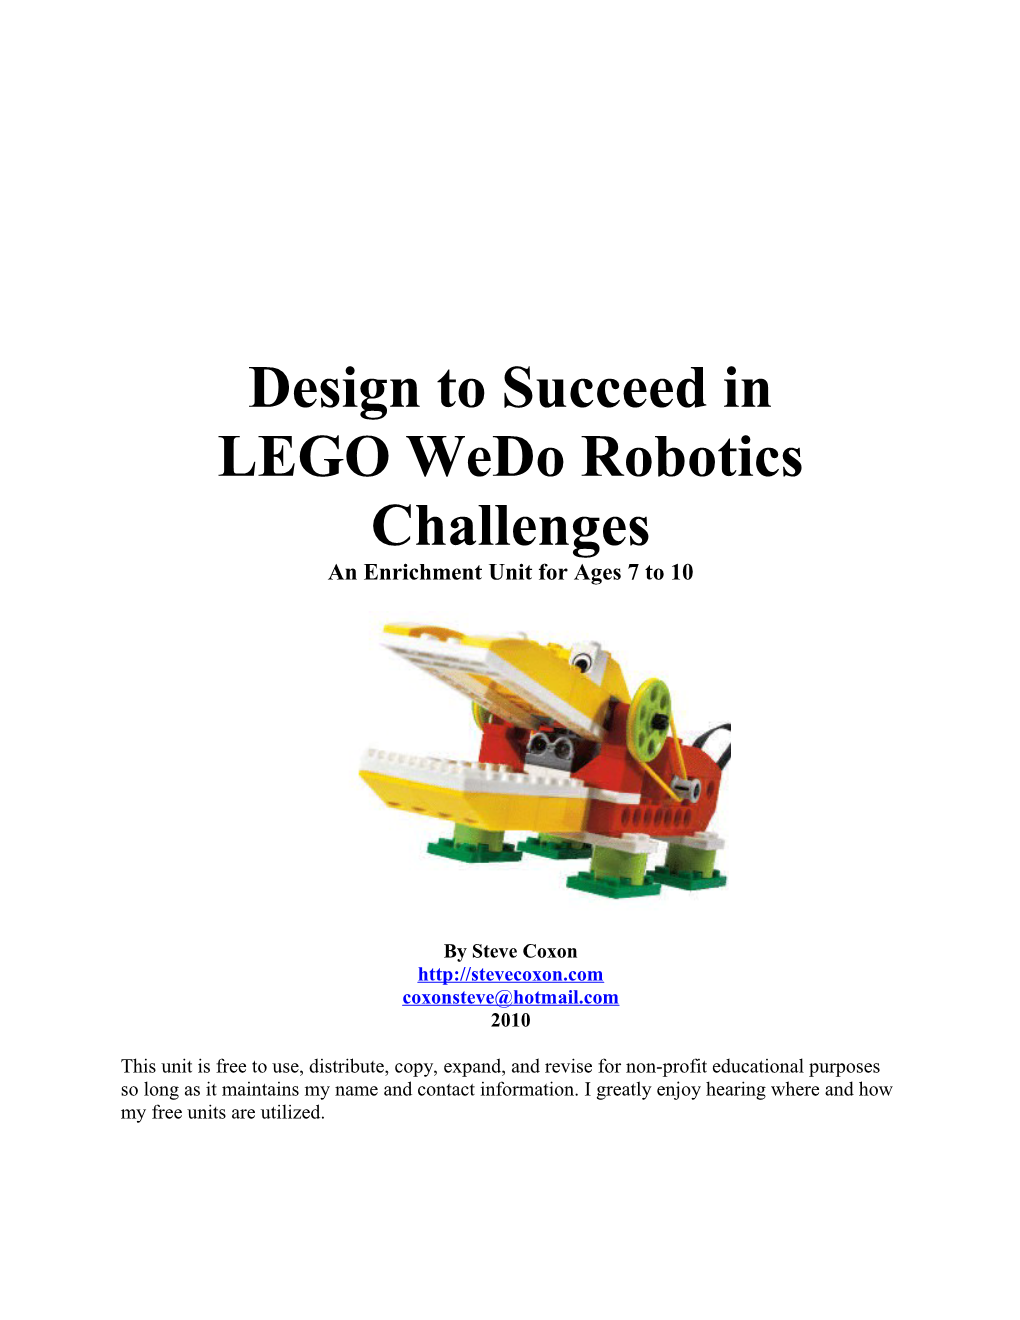 LEGO Wedo Robotics Enrichment Unit